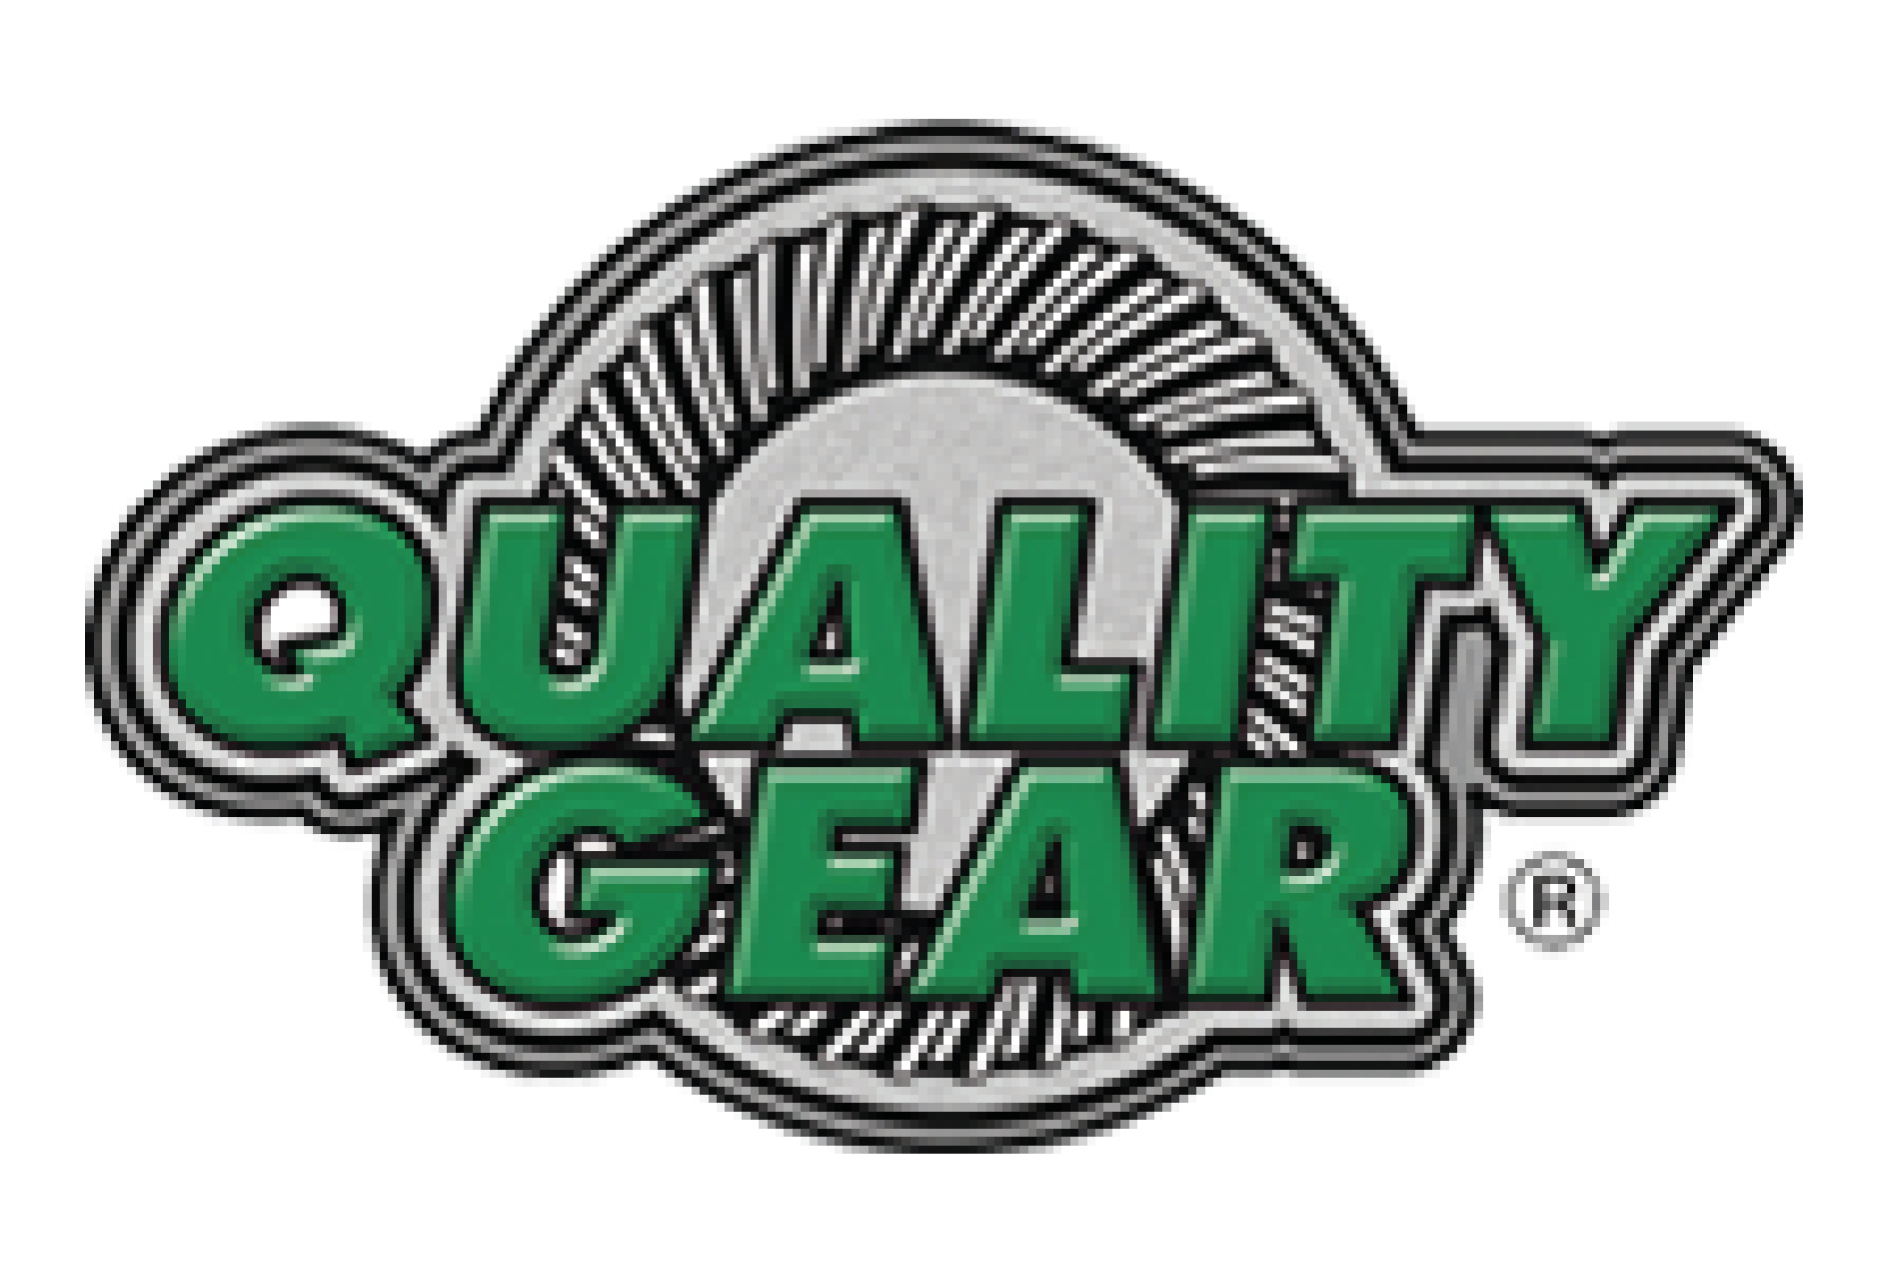 Quality Gear